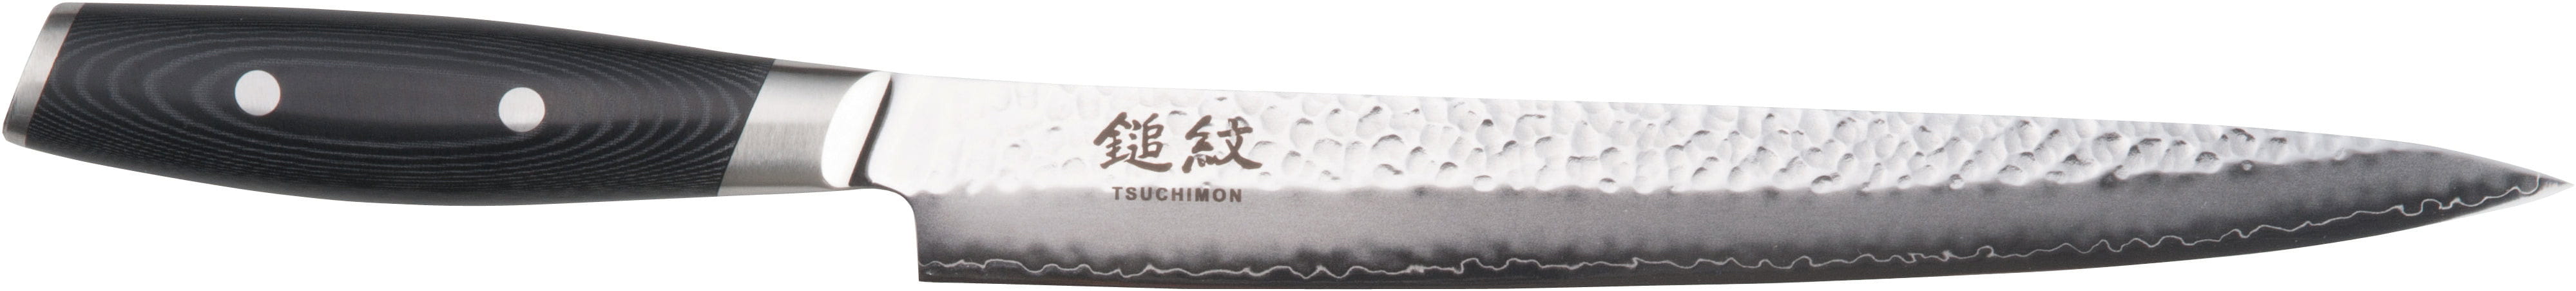 Nóż rzeźbiony Yaxell Tsuchimon, 25,5 cm